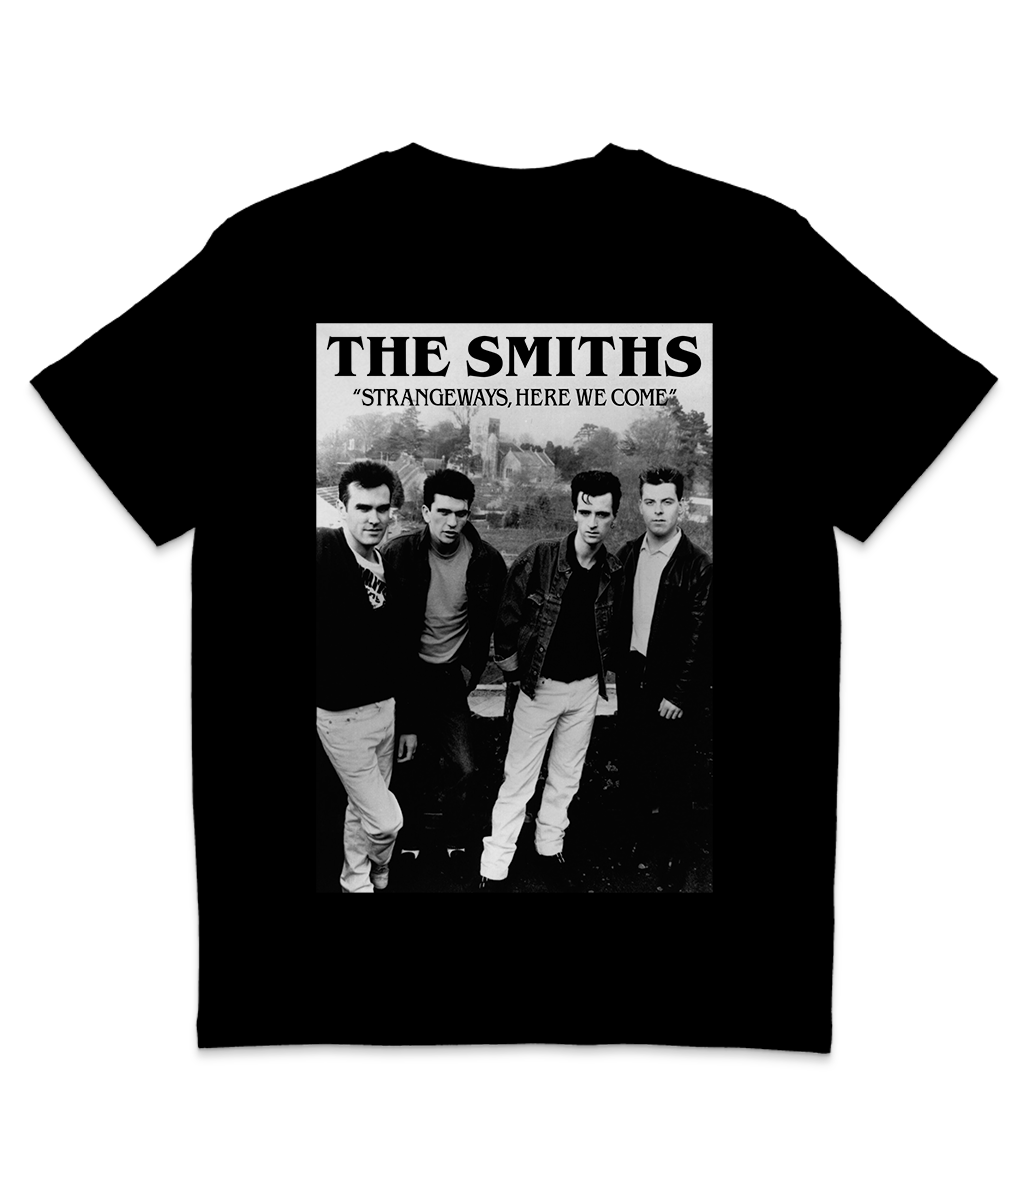 THE SMITHS - Strangeways, Here We Come - Promo - 1987